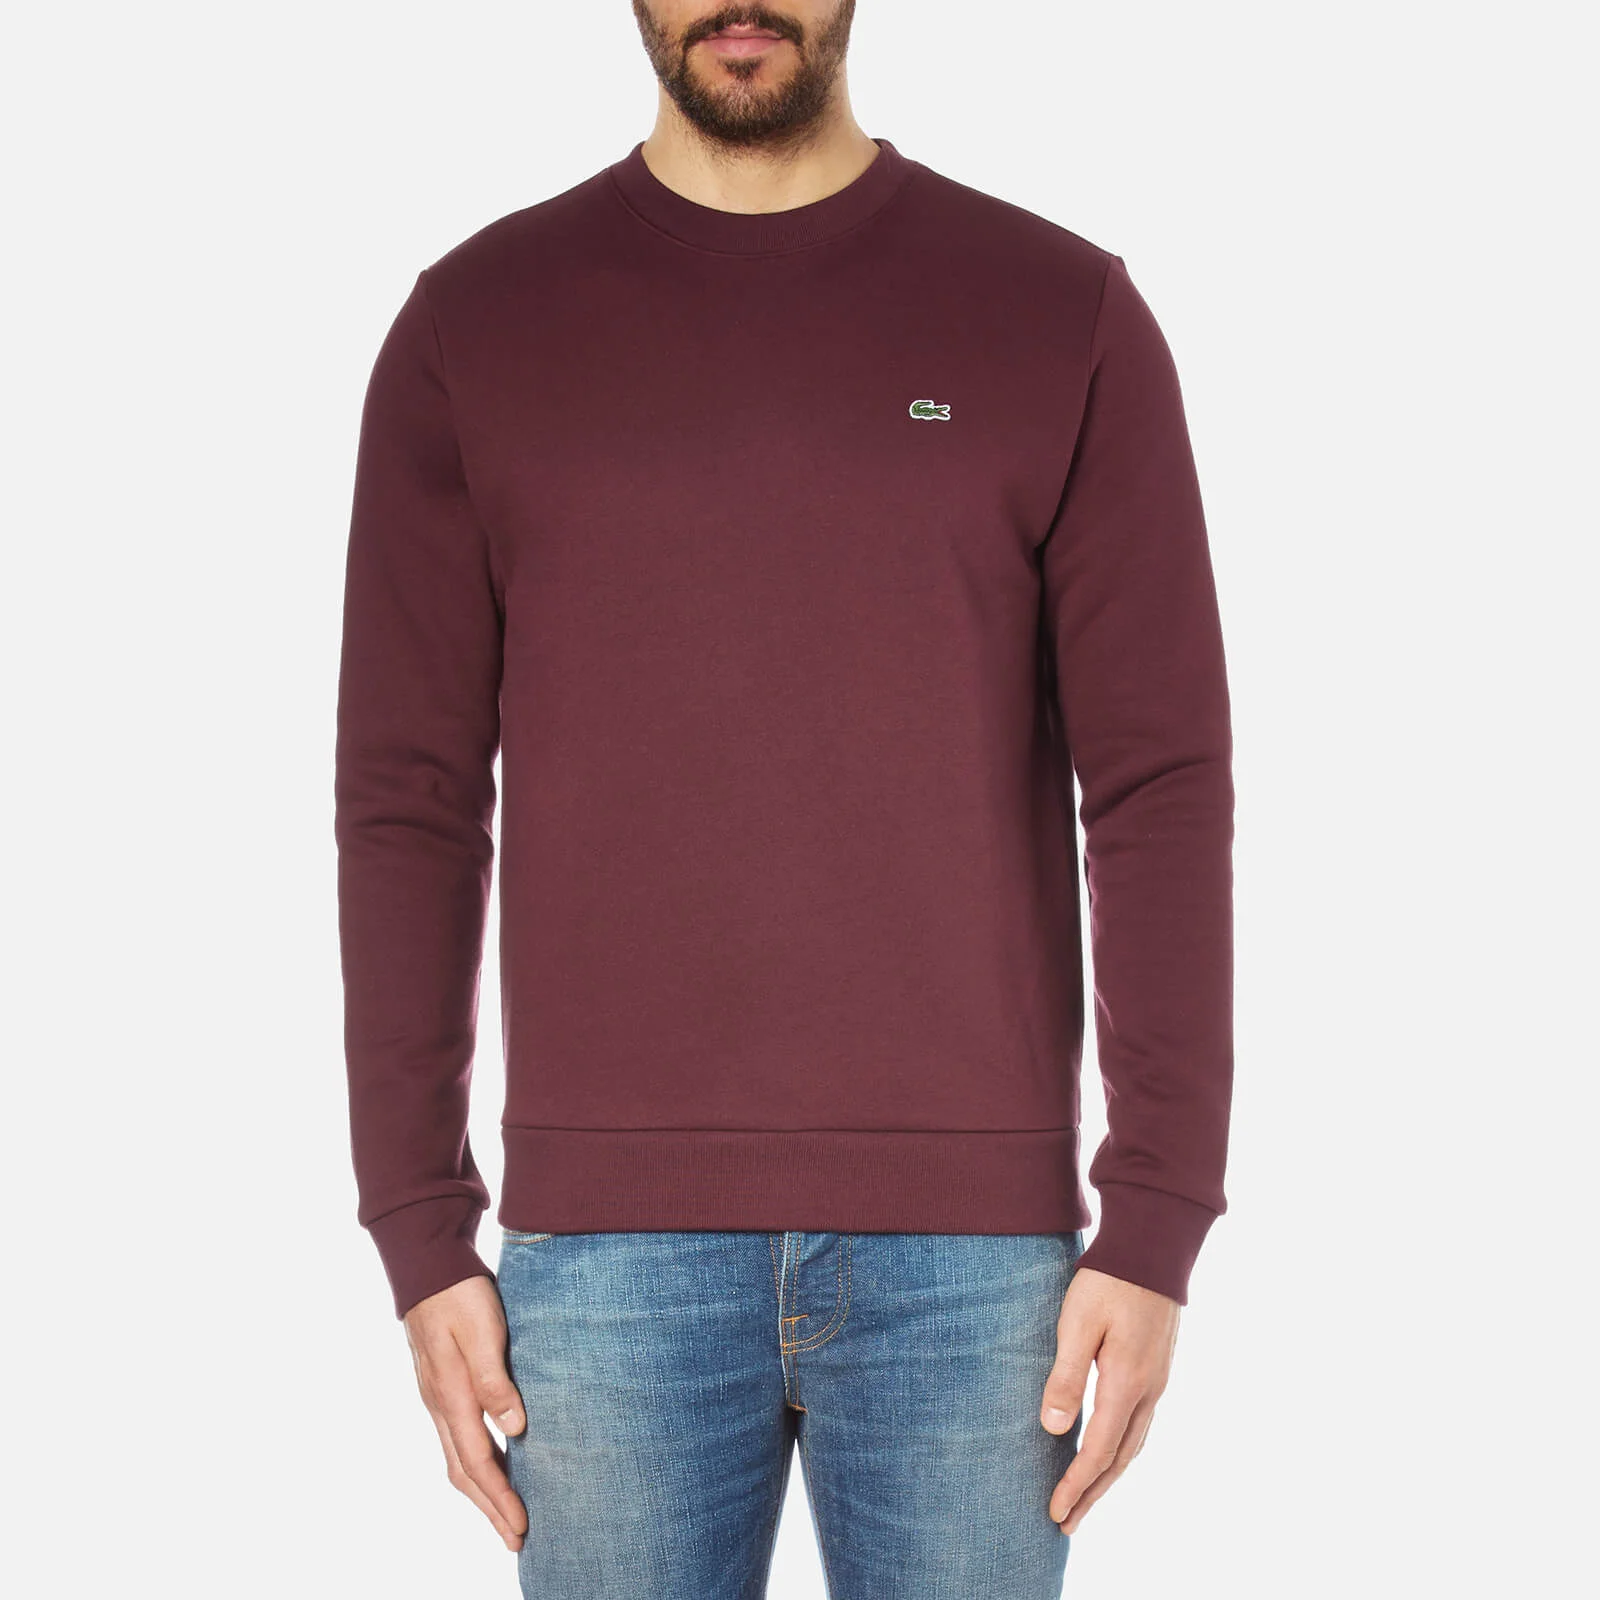 Lacoste Men's Sweatshirt - Vendange Image 1